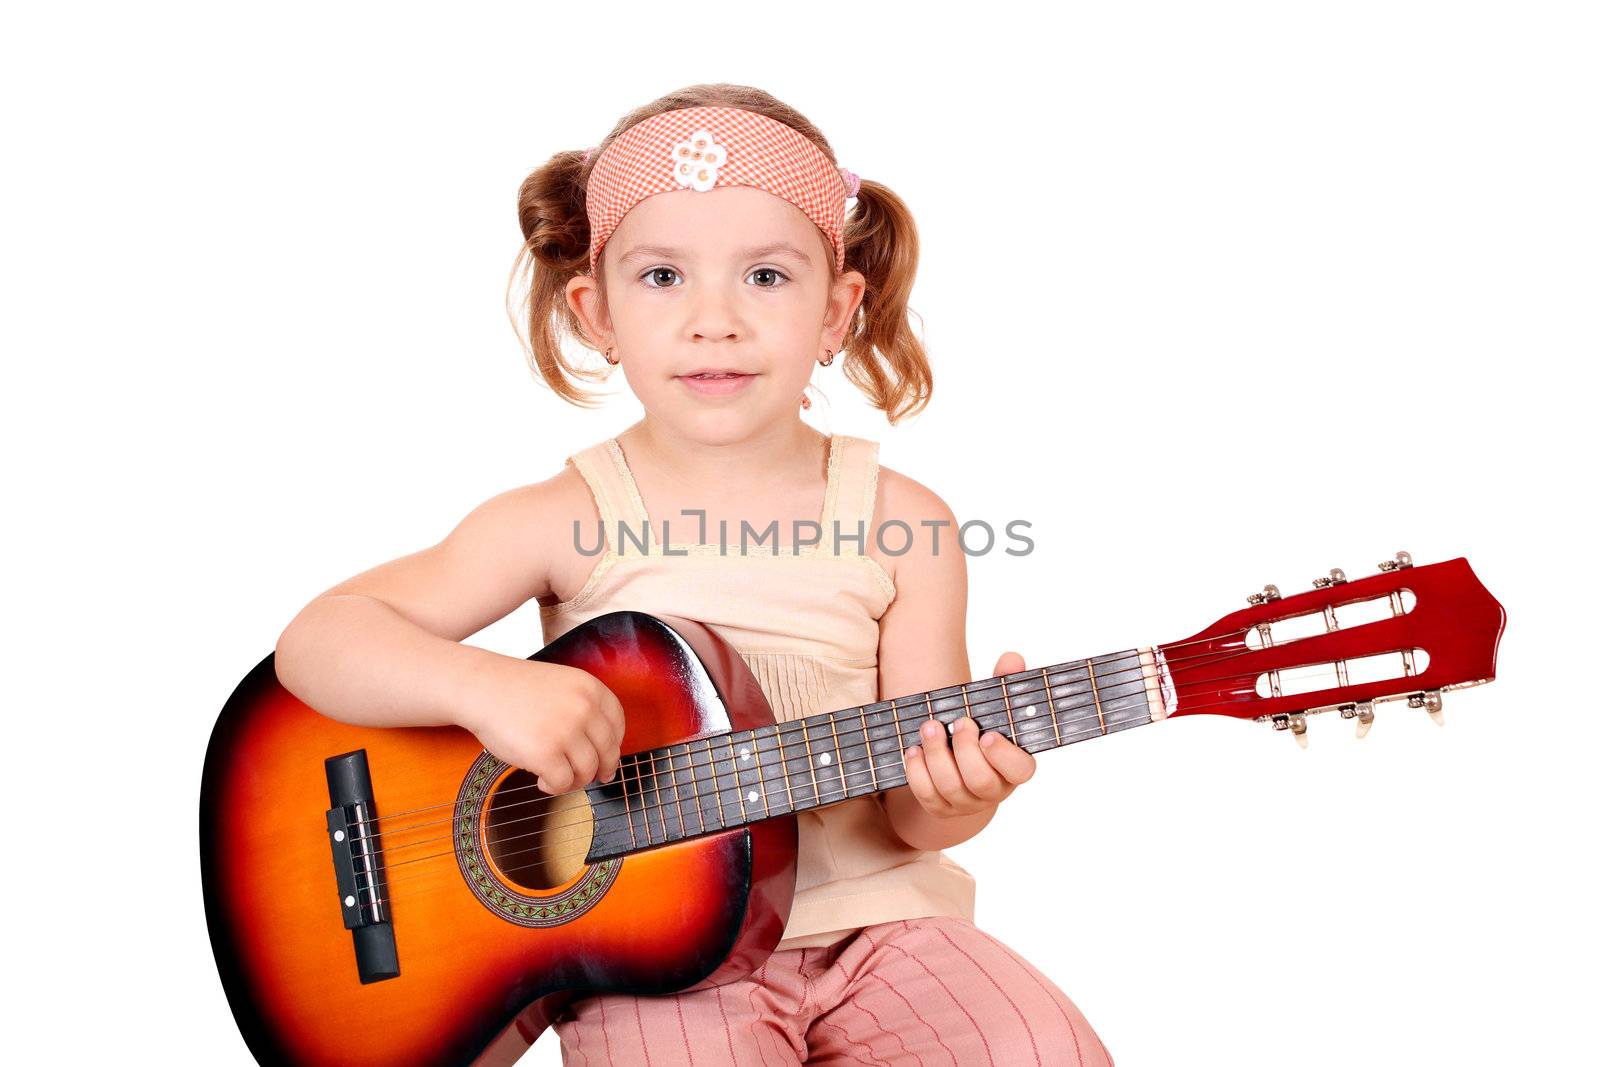 young girl play guitar